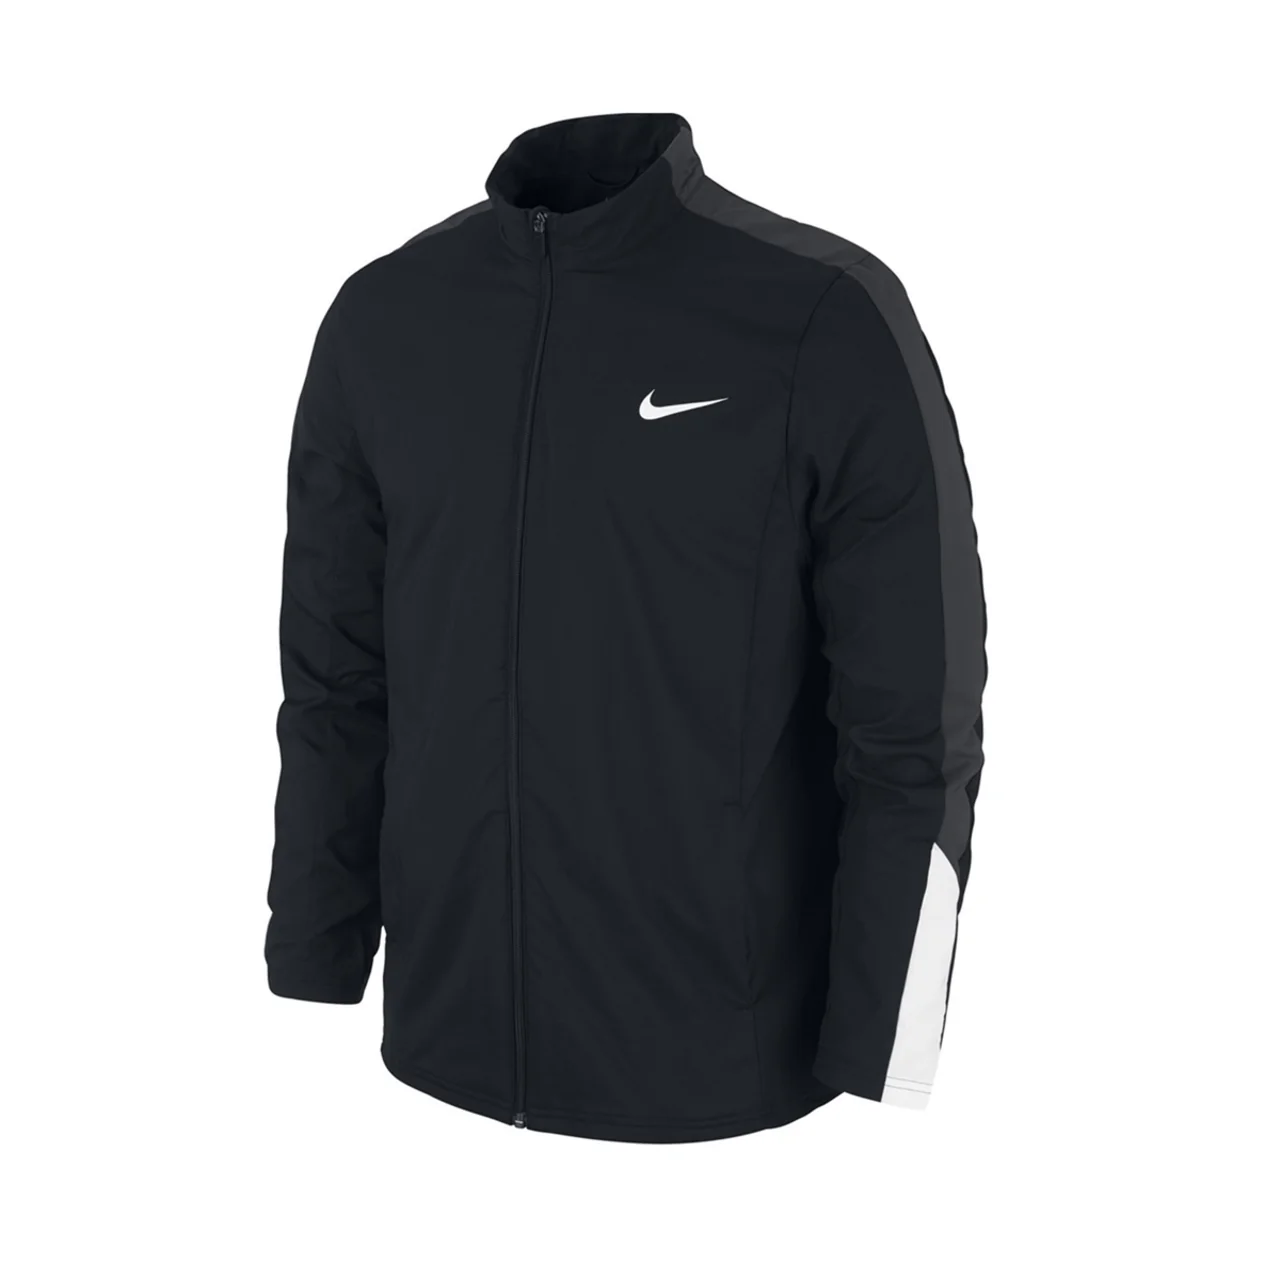 Nike Woven Jacket Black Size S